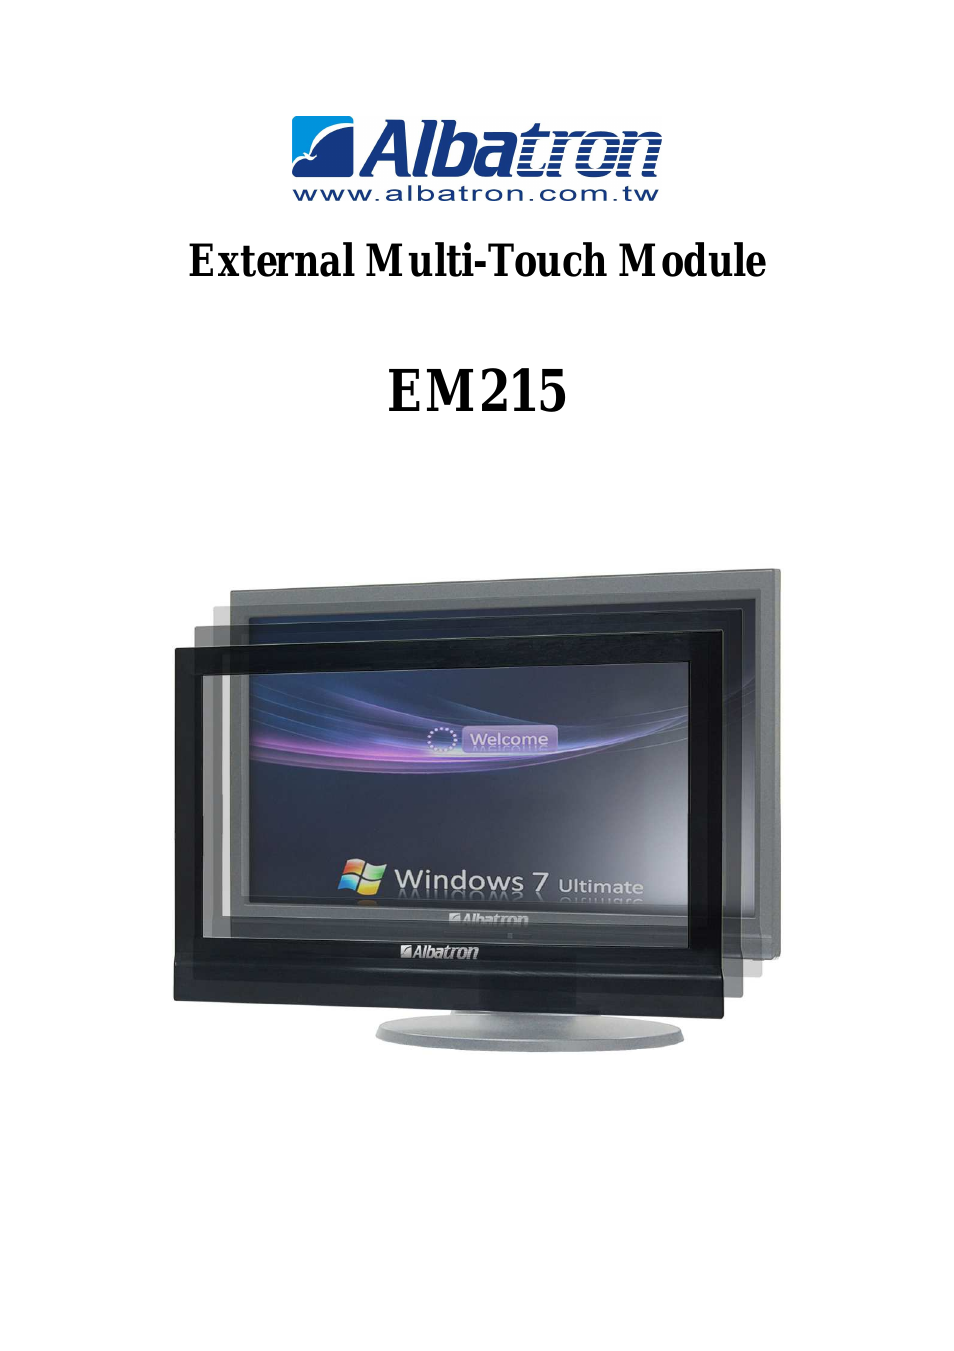 EXTERNAL MULTI TOUCH MODULE EM215